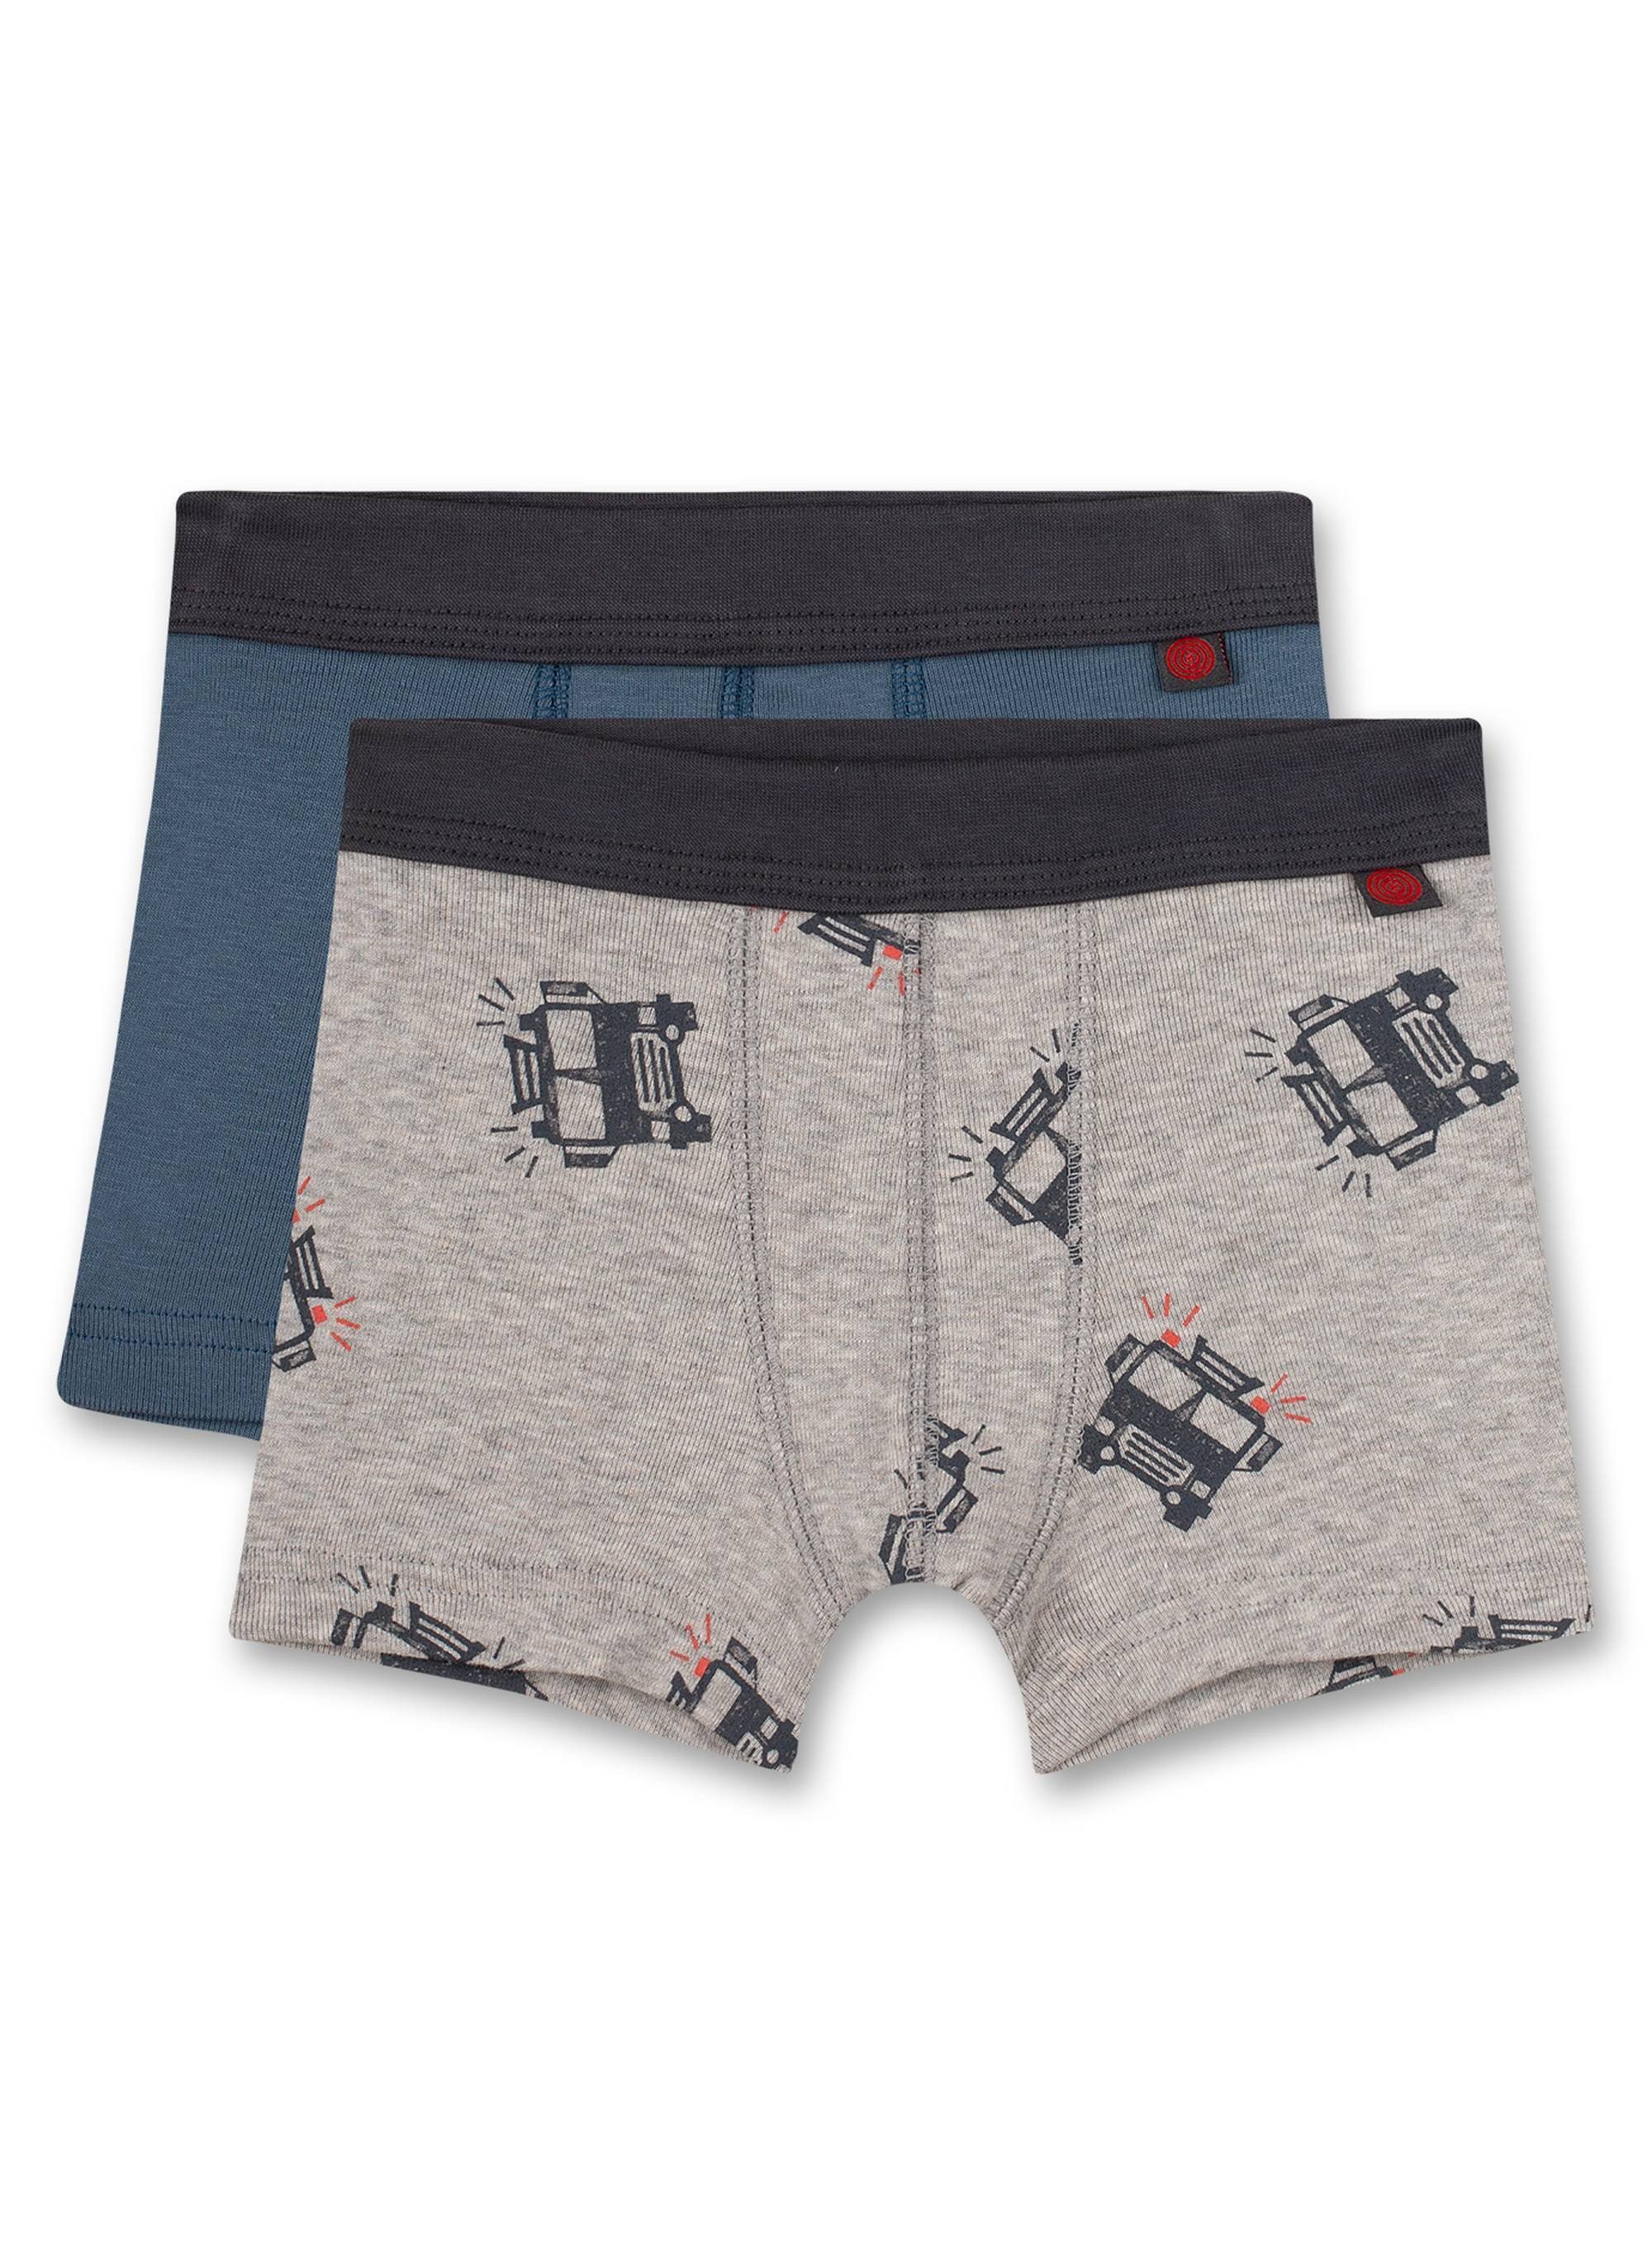 Sanetta Boxer Jungen Shorts 2er Pack - Pant, Unterhose, Organic